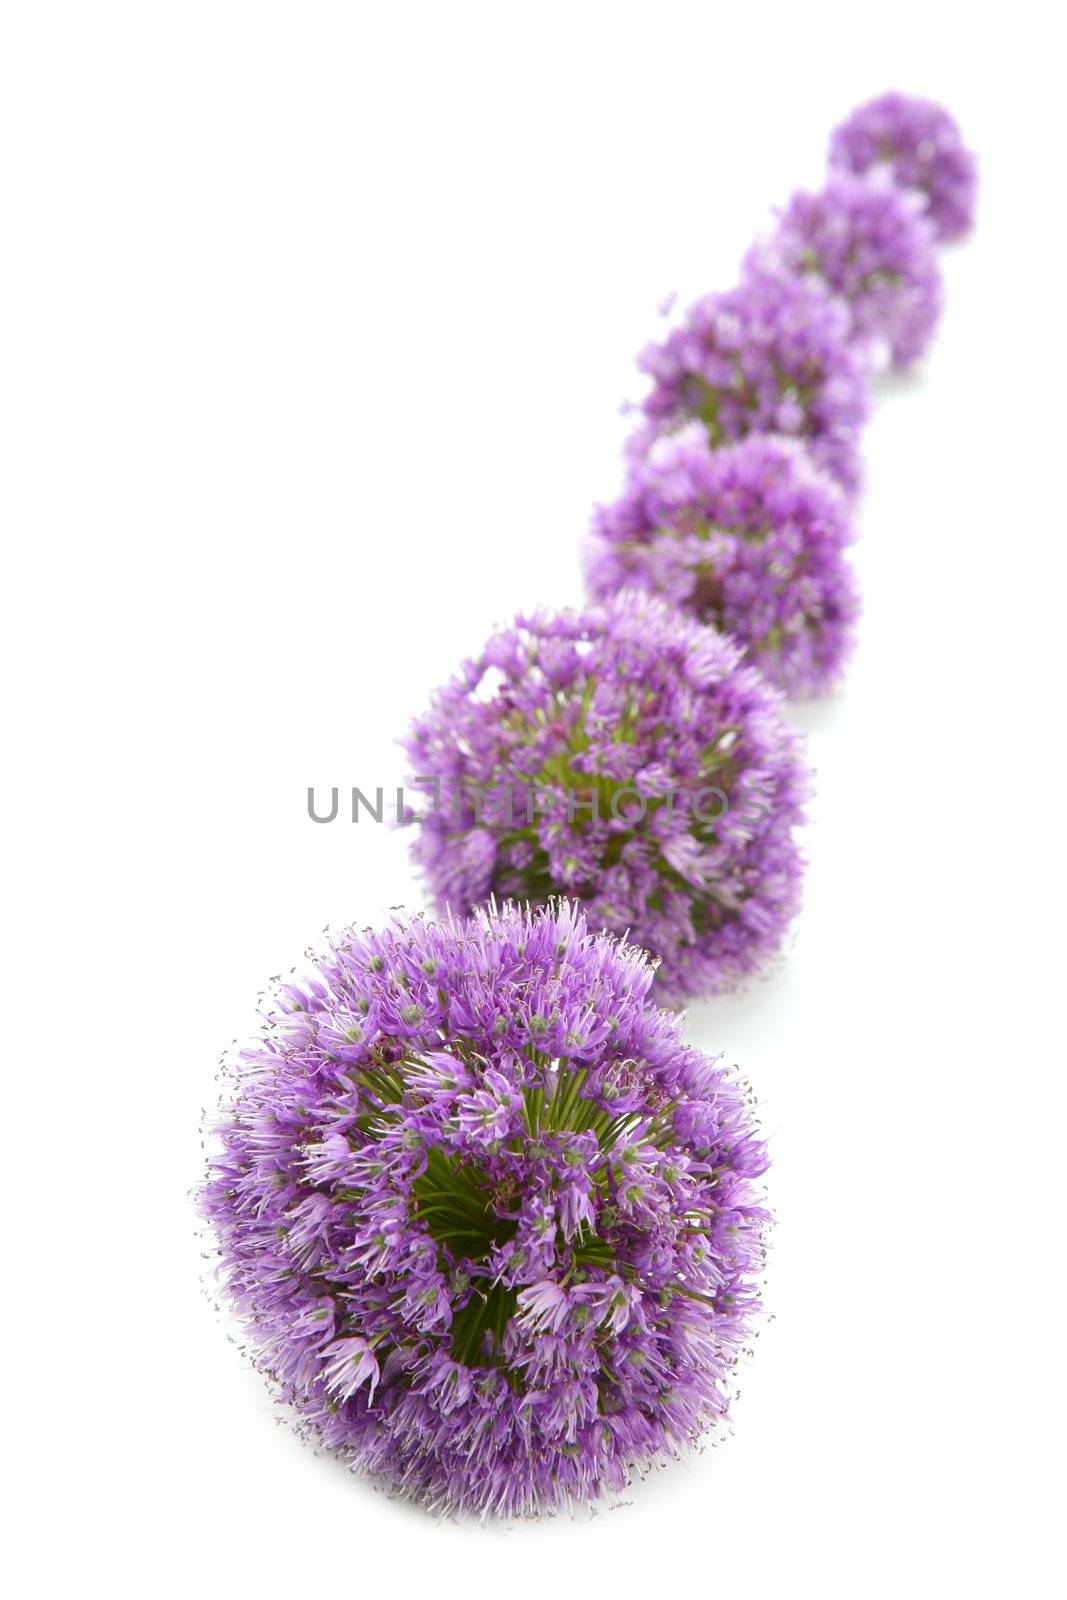 Onion purple flower macro row on white by lunamarina